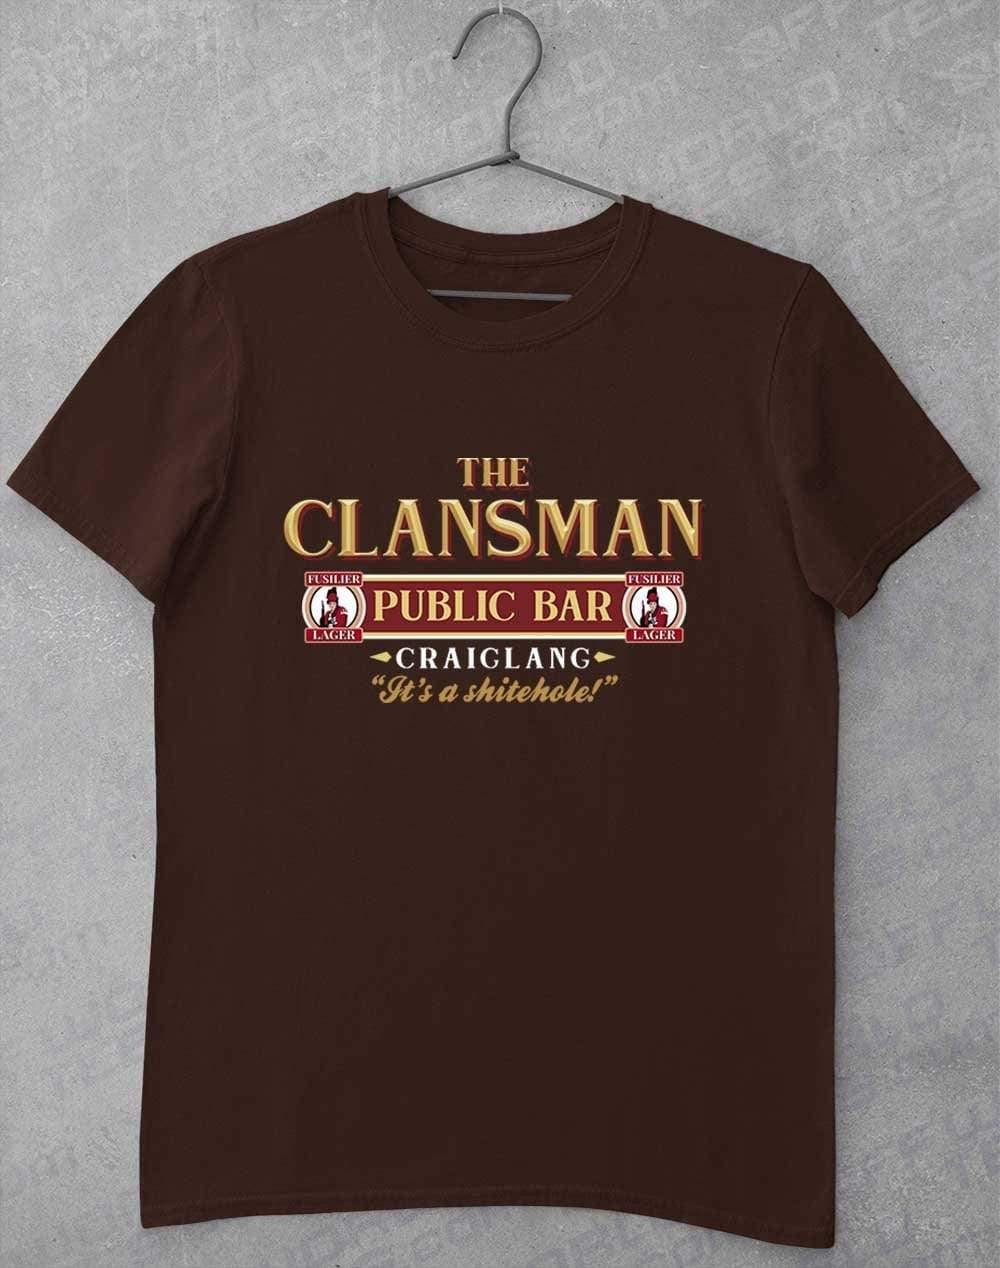 The Clansman Craiglang T-Shirt S / Dark Chocolate  - Off World Tees